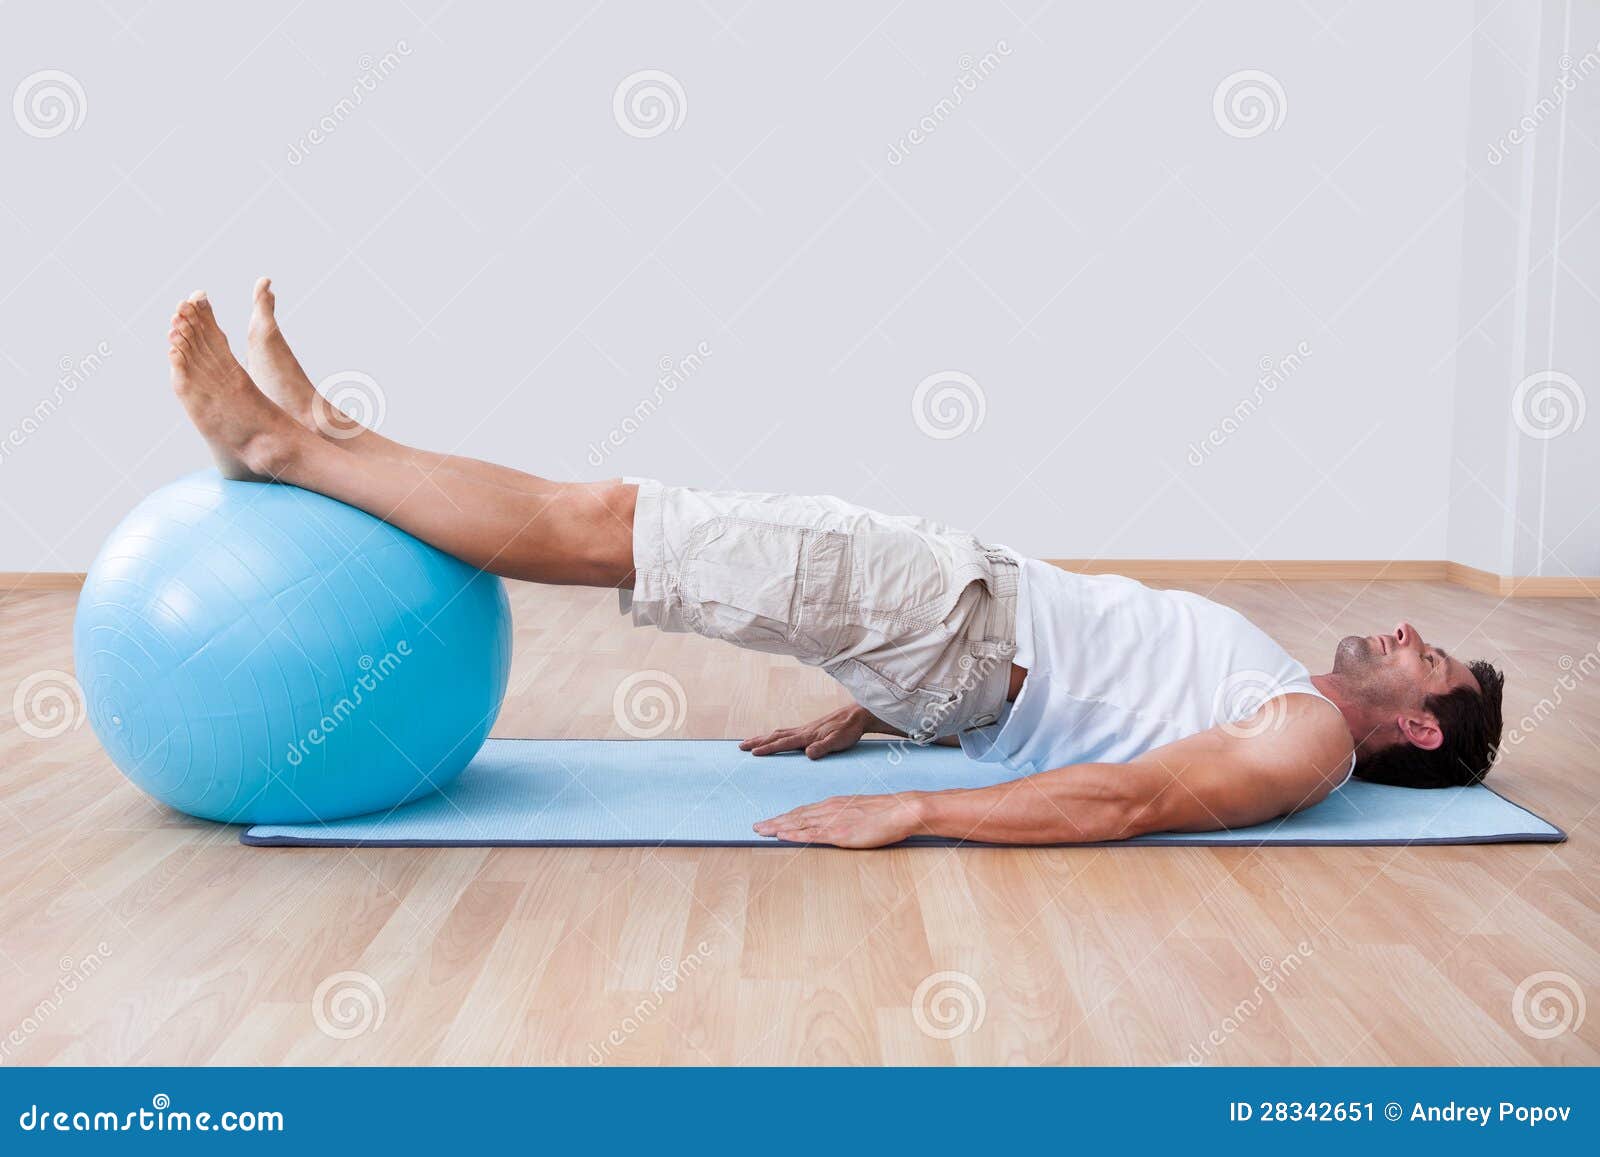 young man exercising on a pilates ball